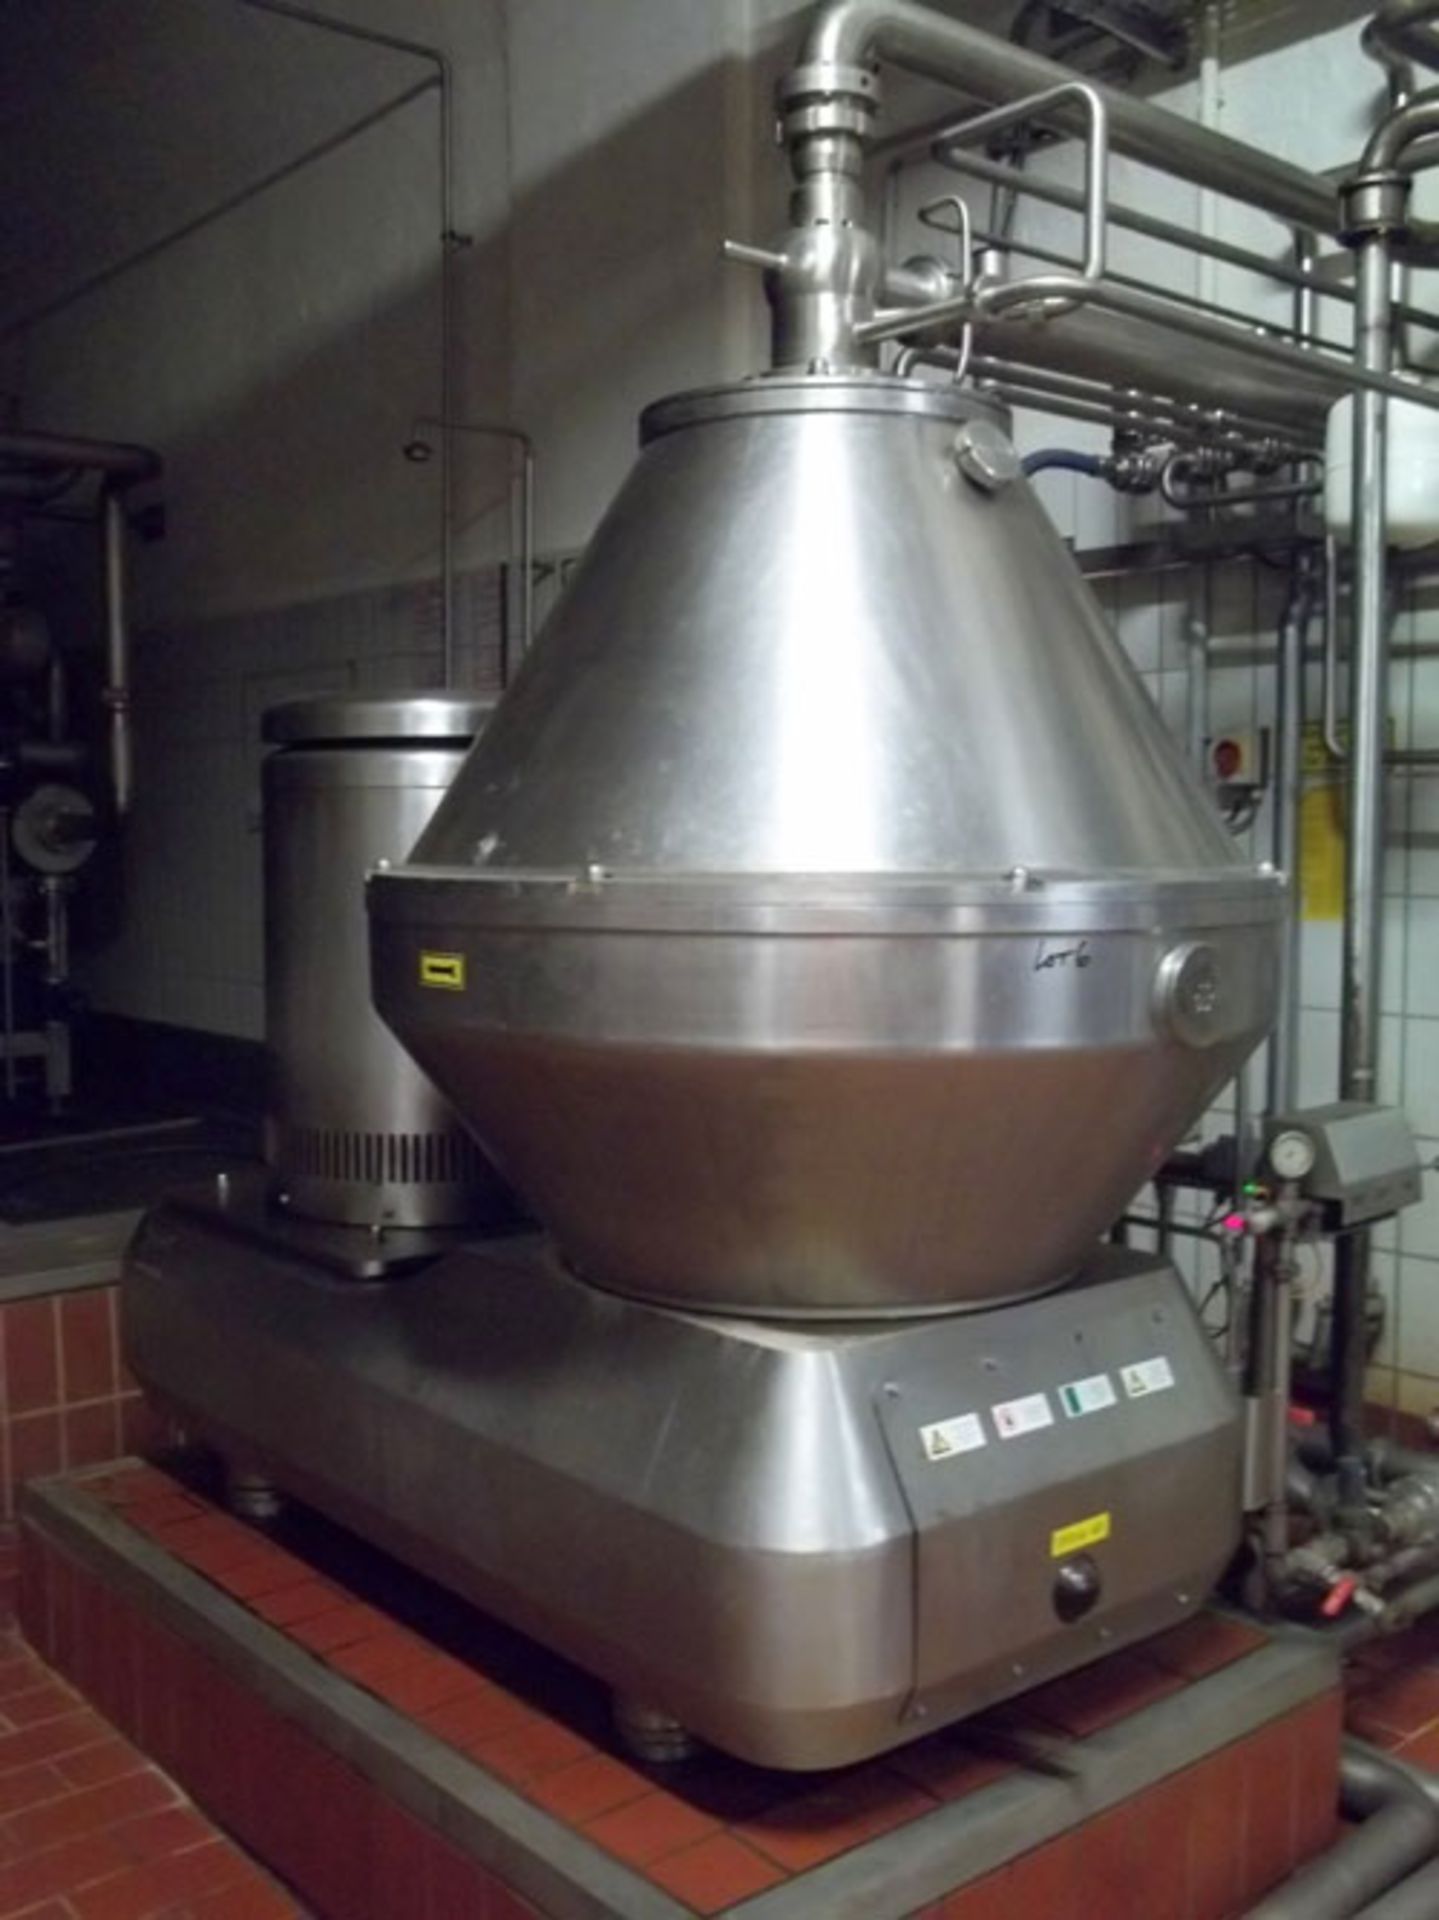 KMA Sudmo-Kyffhauser Machinenfabrik Artern type GTS 330B-KHL stainless steel disc bowl centrifuge. - Image 2 of 8